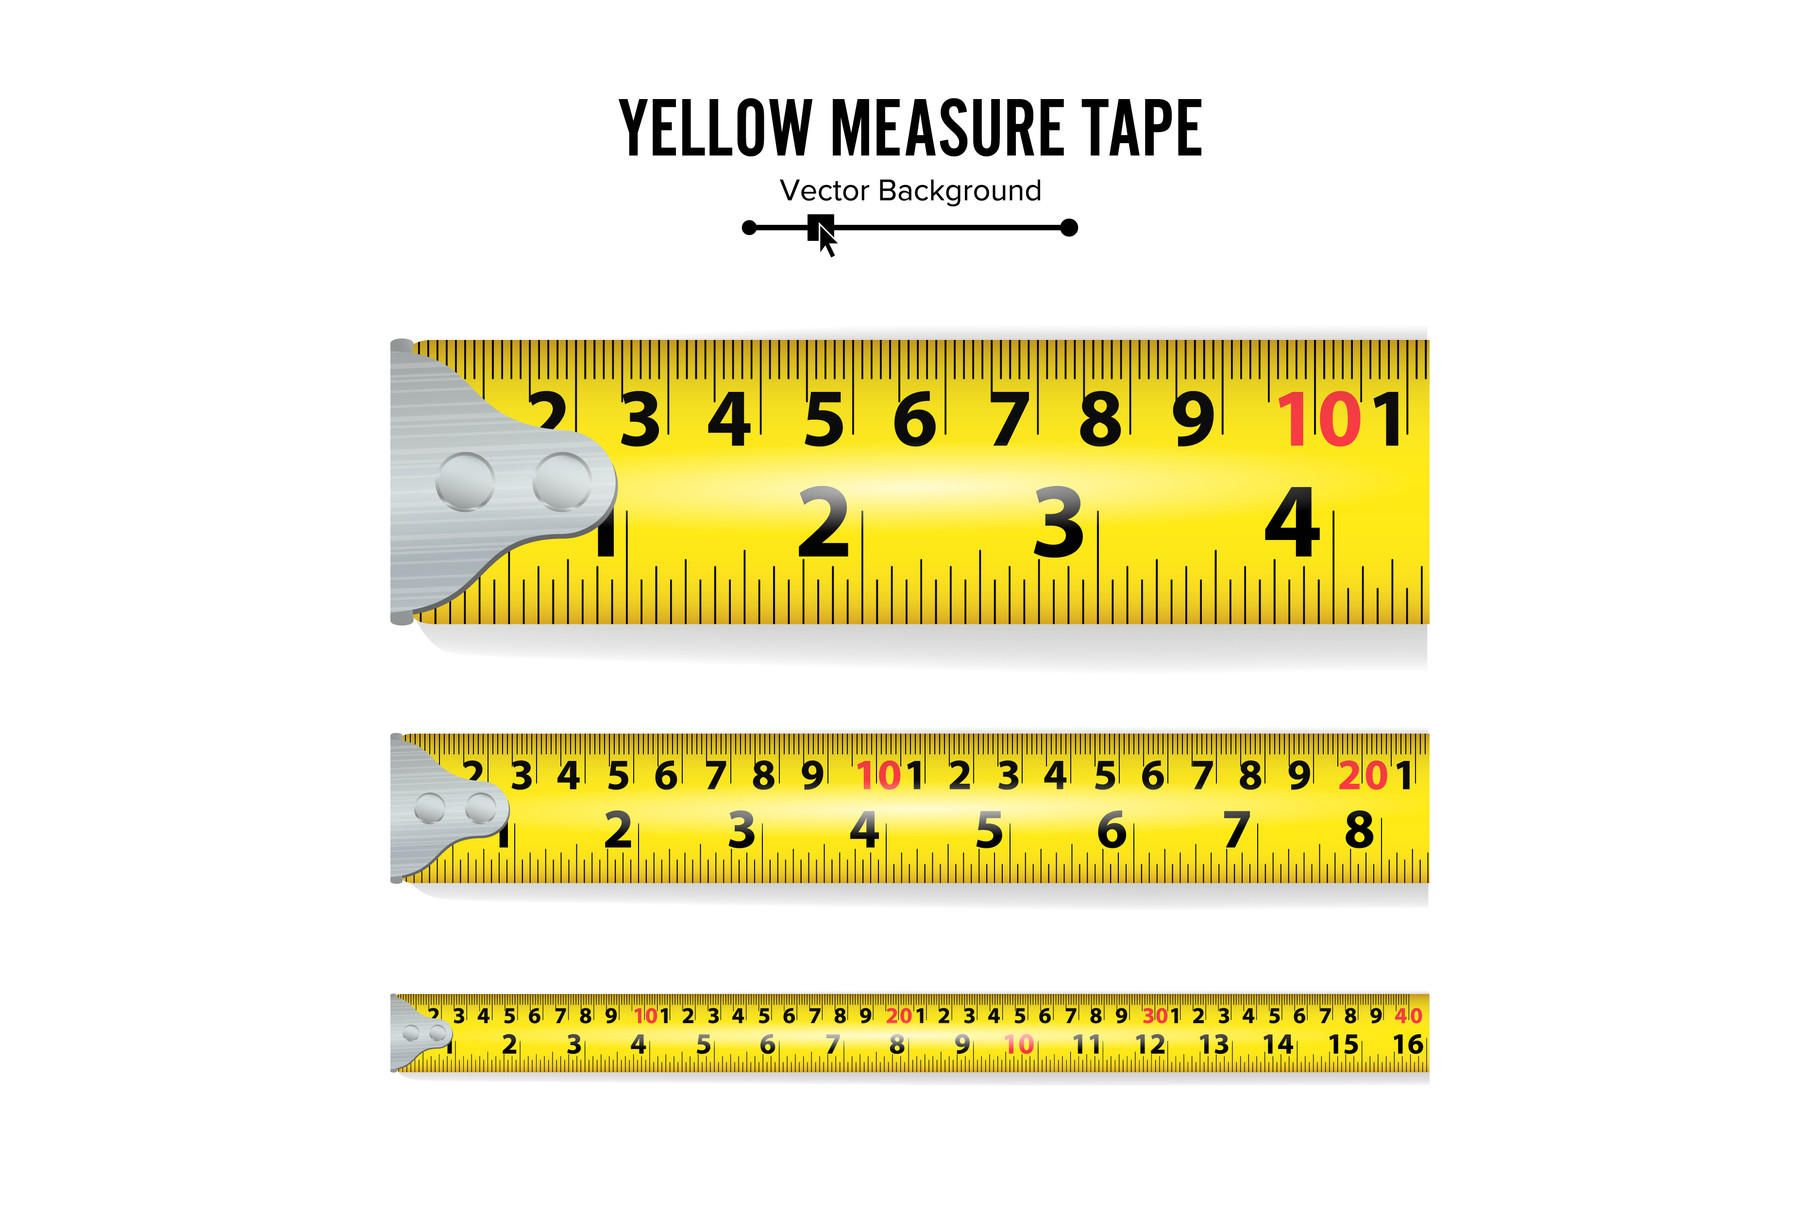 centimeter tape measure Stock Photo